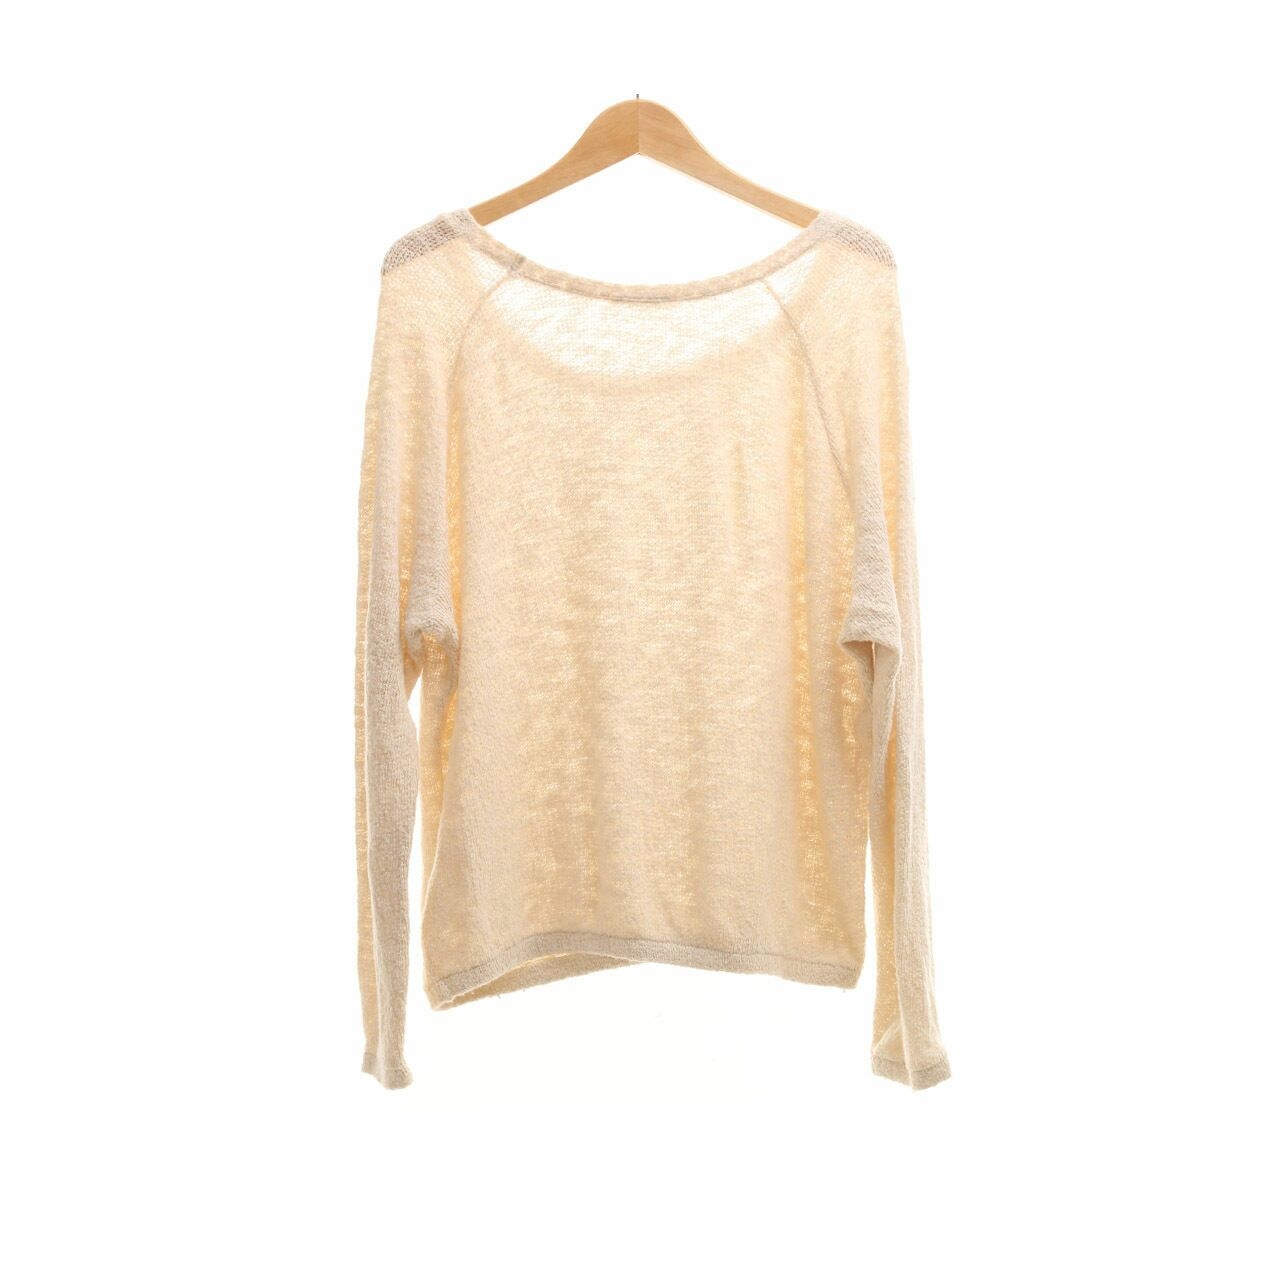 Zara Cream Sweater